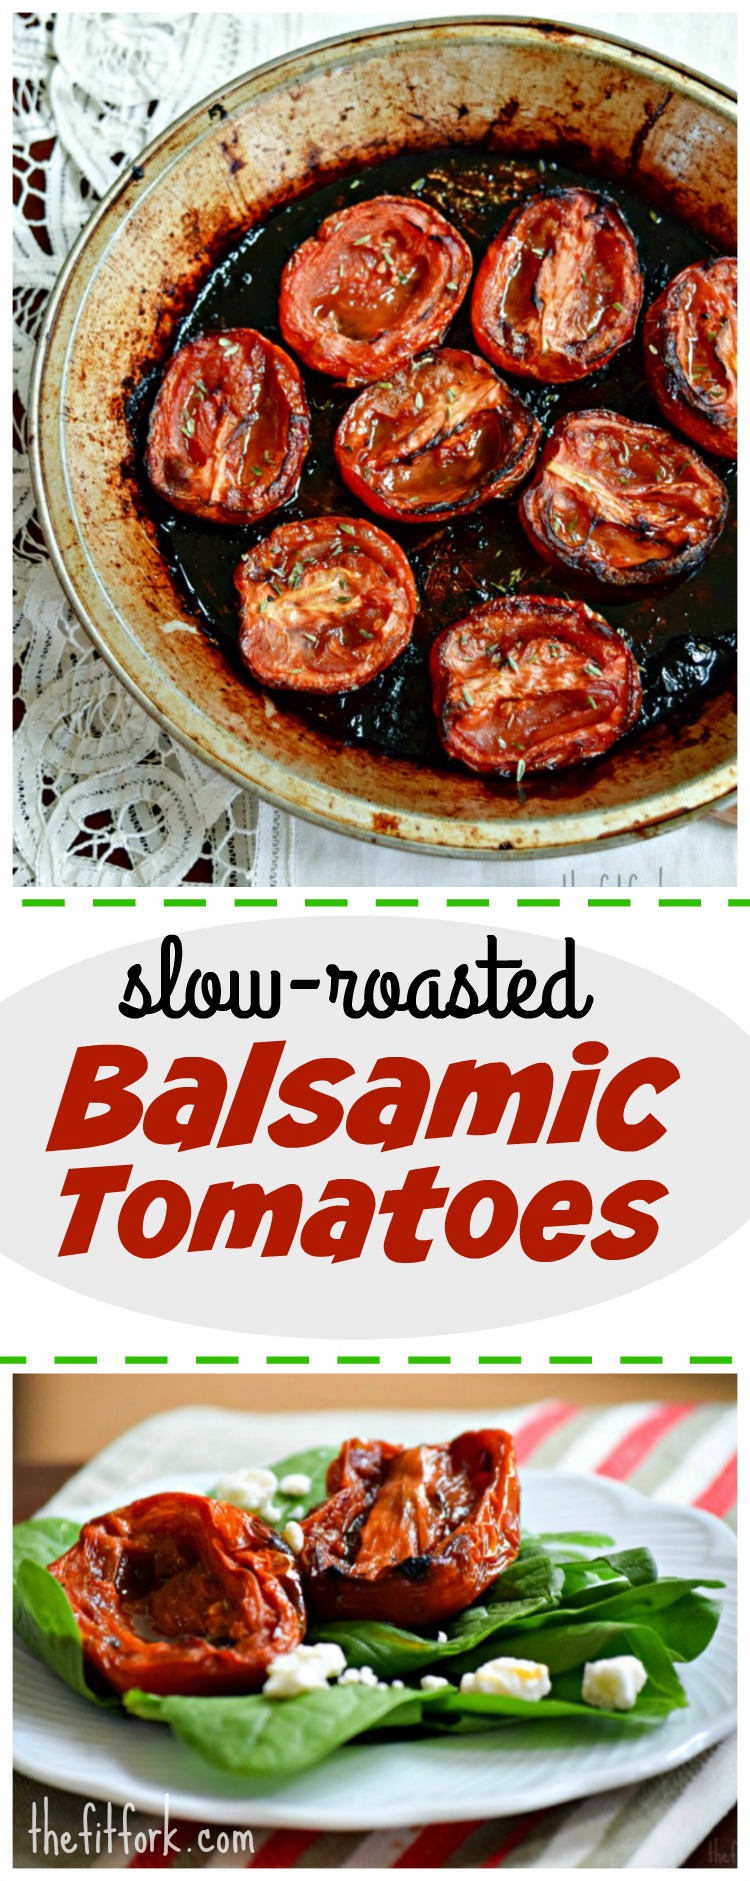 Slow Roasted Balsamic Tomatoes and La Tomatina | thefitfork.com